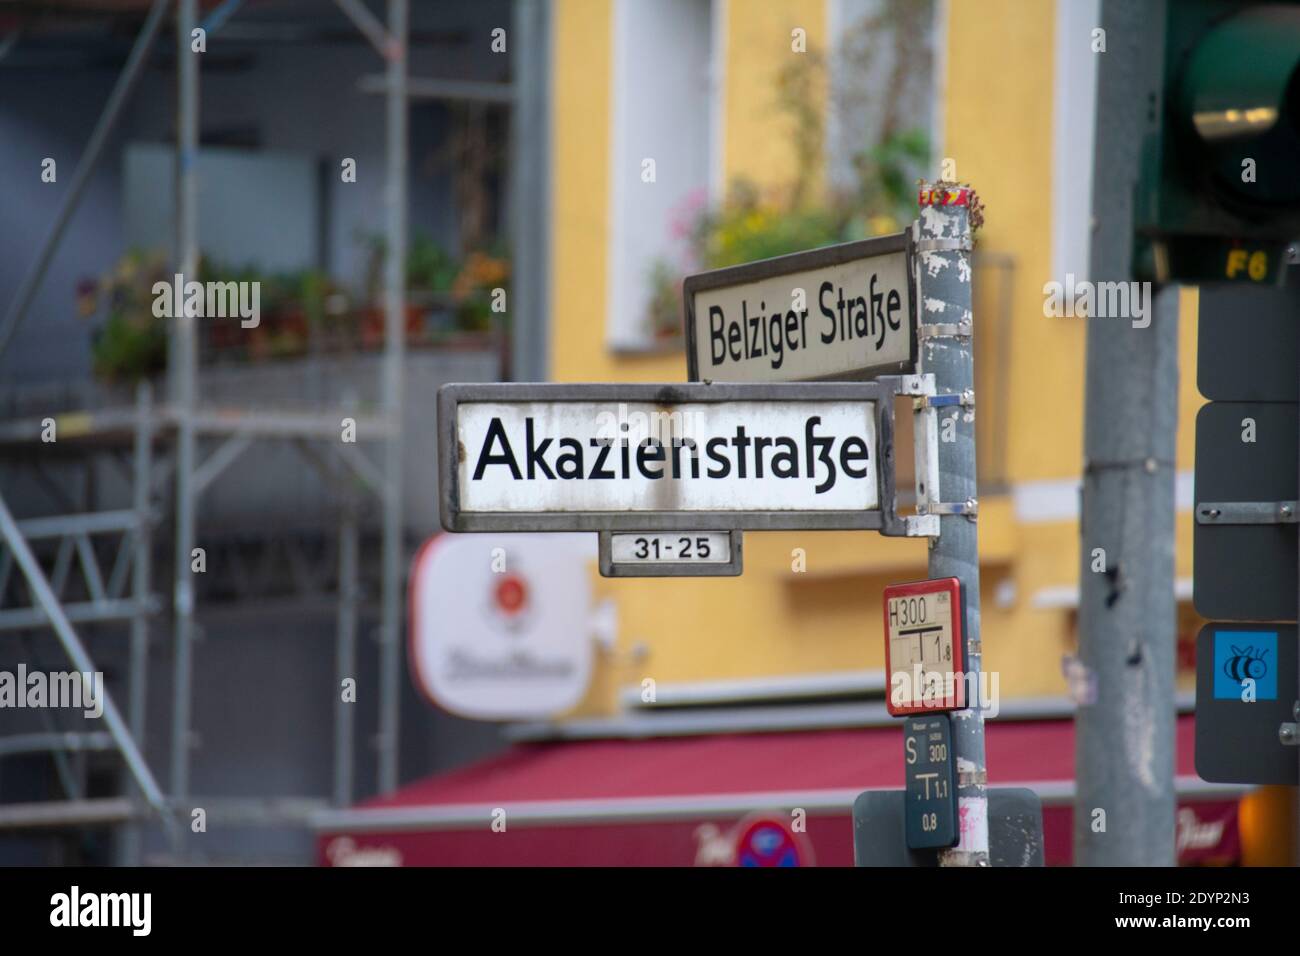 Akazienstrasse street sign landscape famous street in Schoneberg Berlin Stock Photo